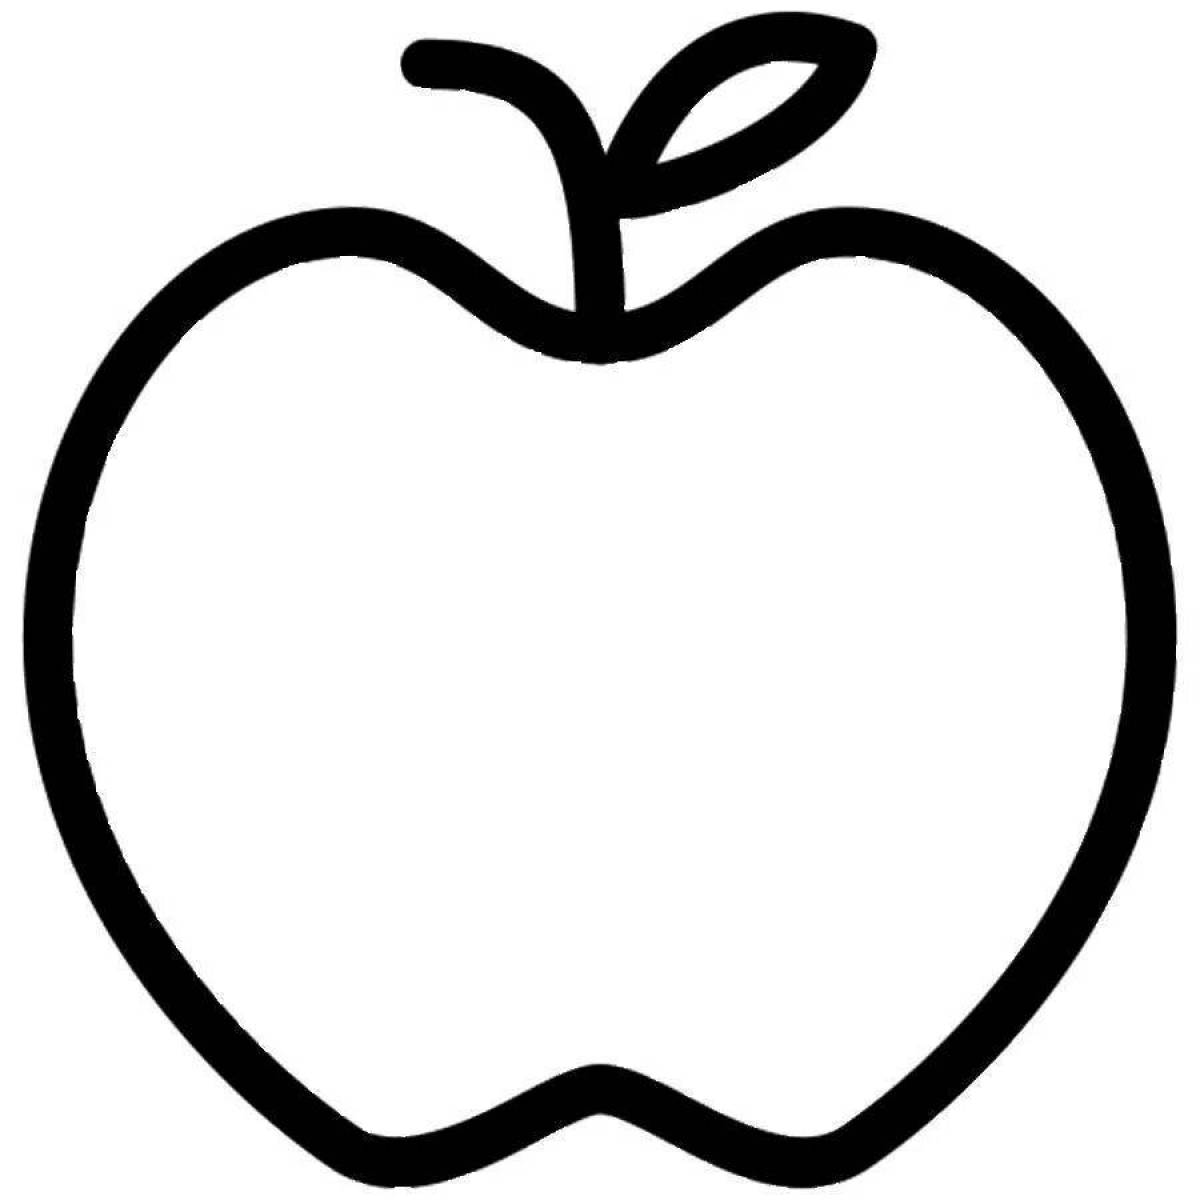 Креативная раскраска apple для детей